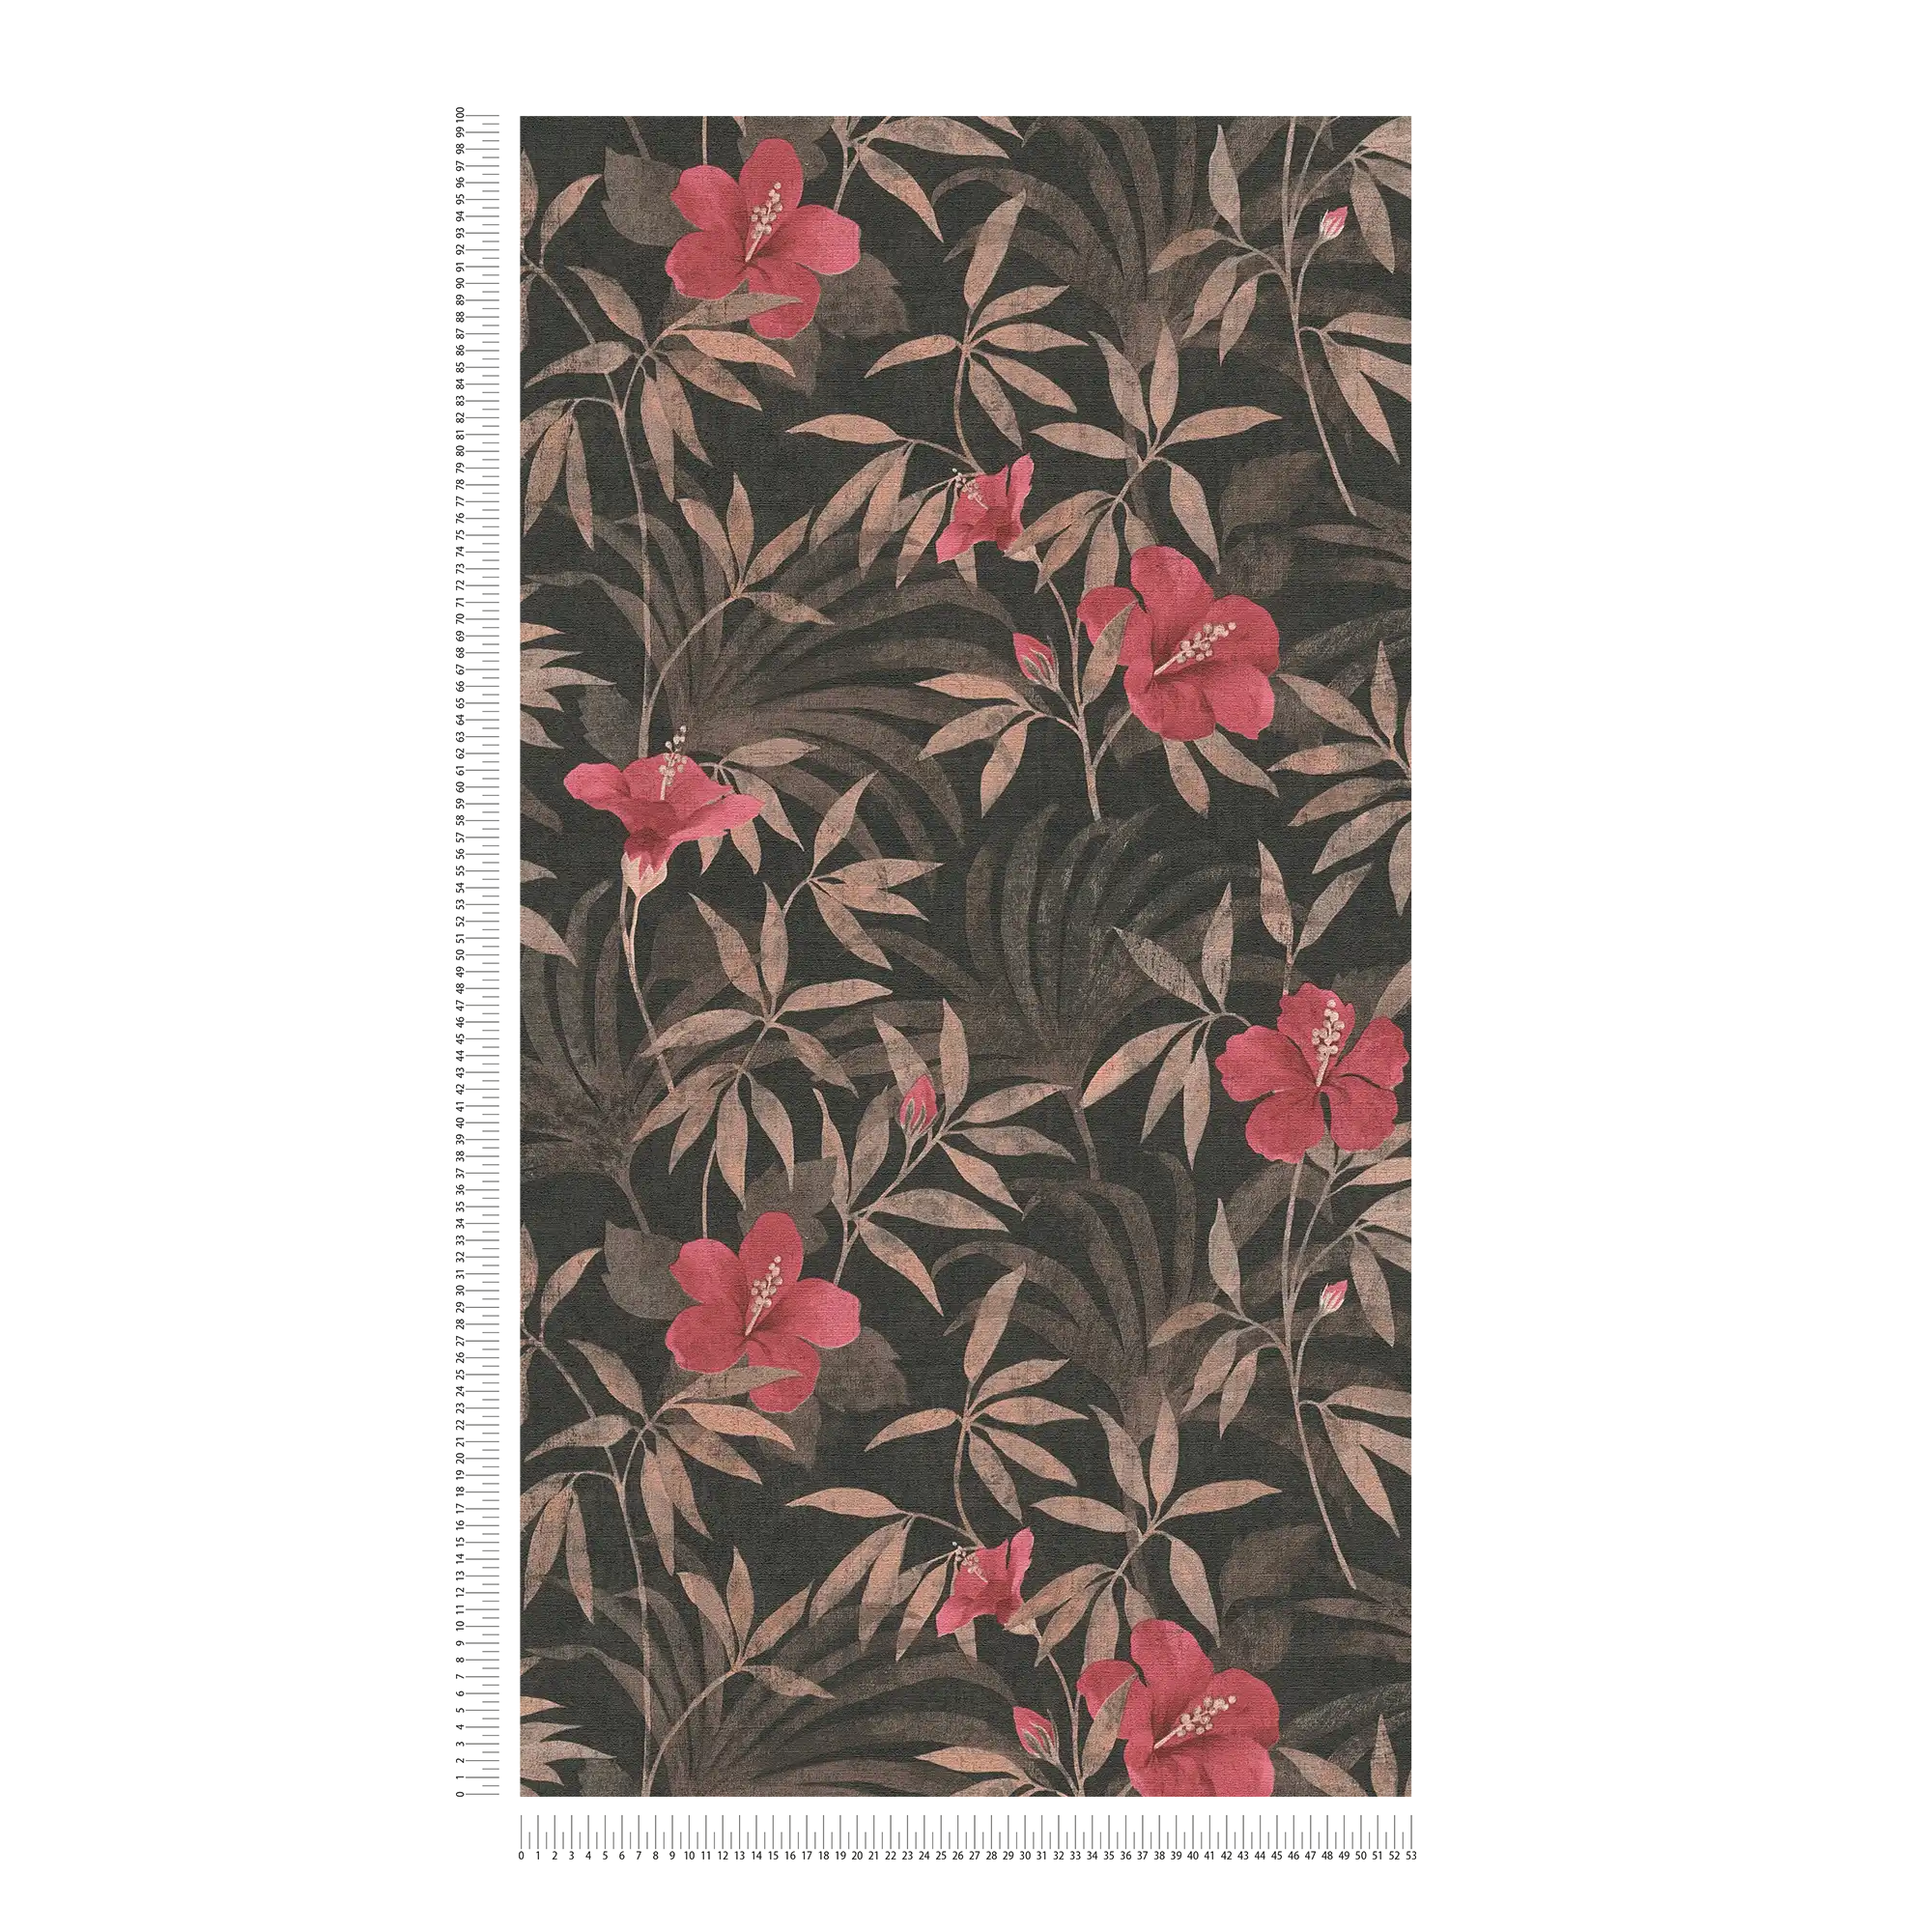             Wallpaper jungle leaves & hibiscus flowers - brown, red
        